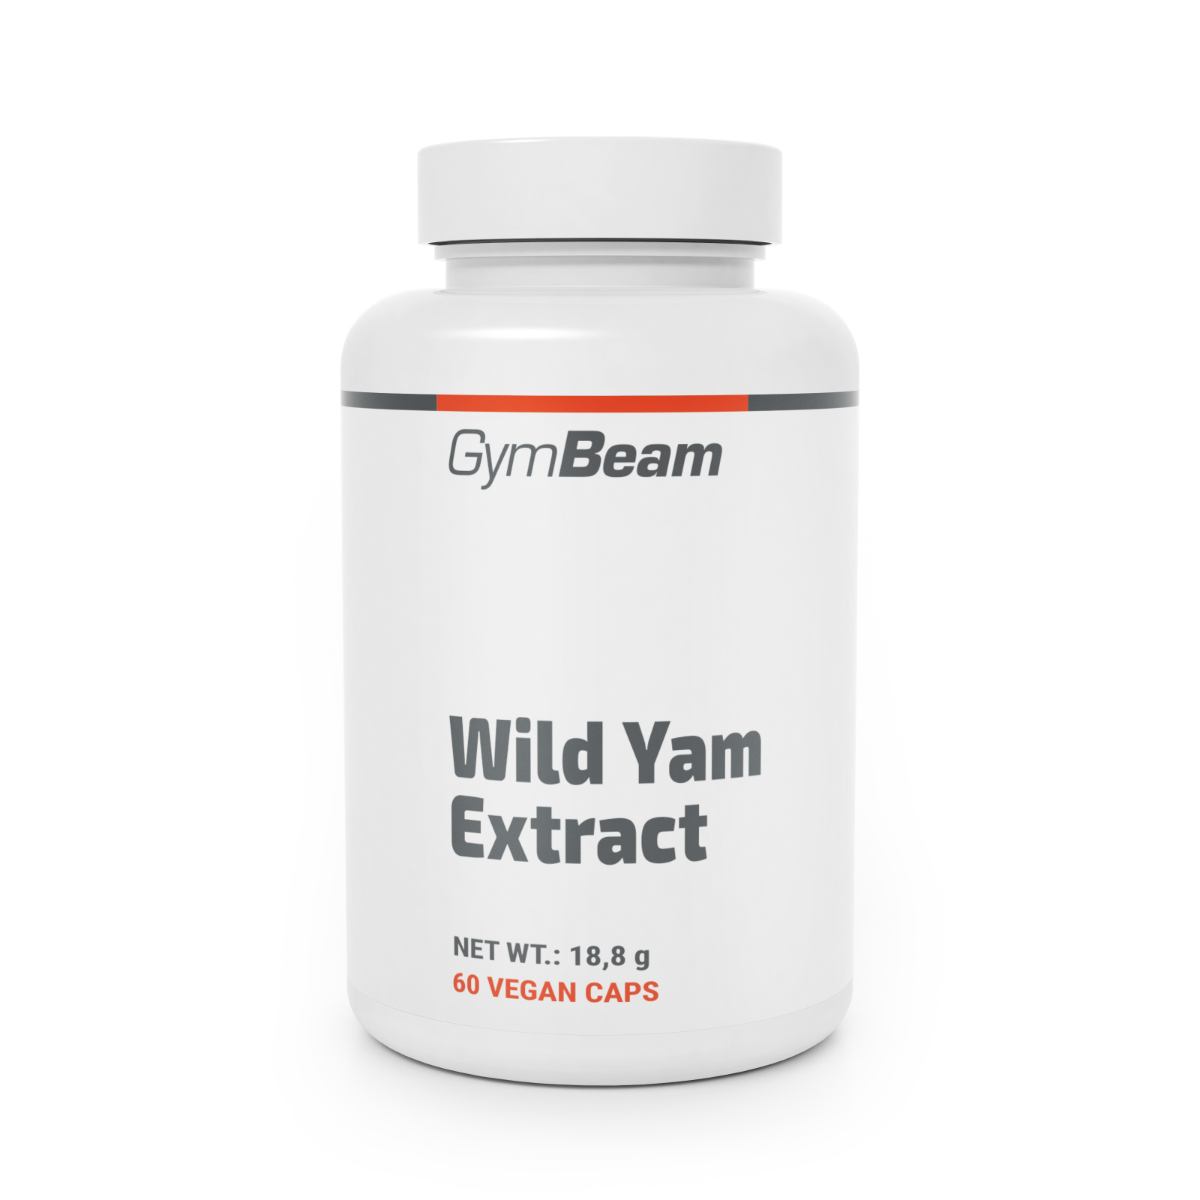 Smldinec chlpatý (Wild yam) extrakt - GymBeam violet 60 kaps.